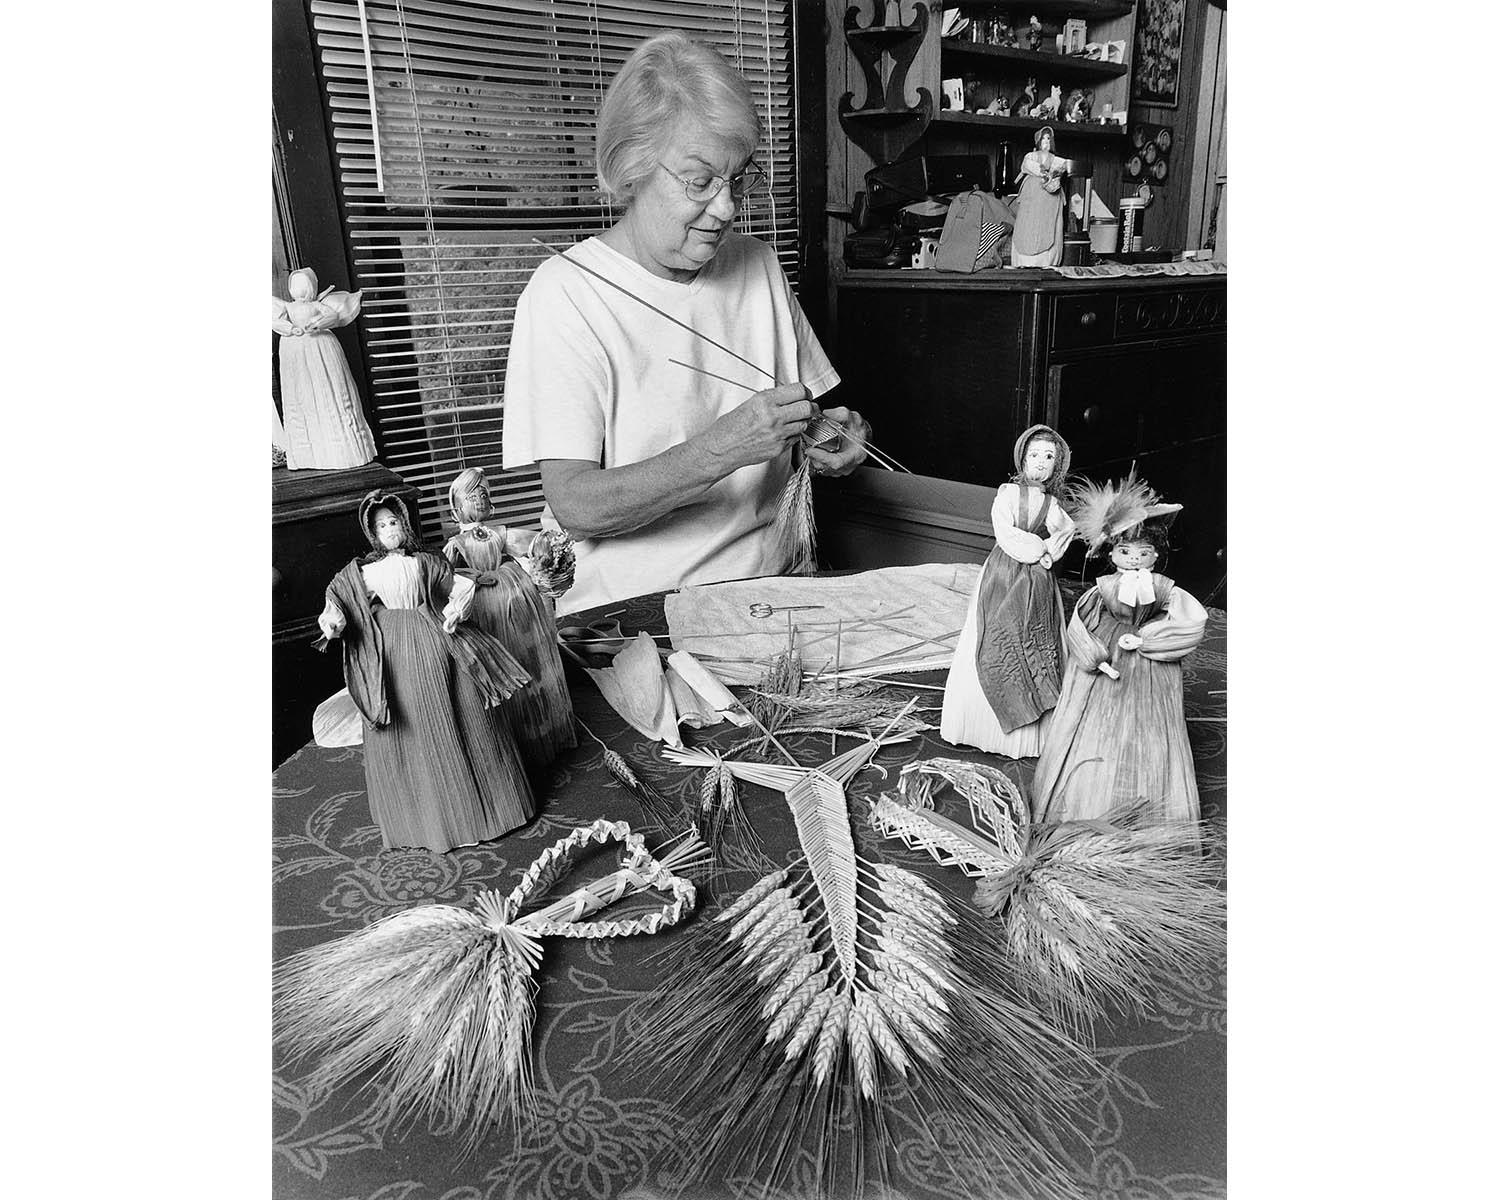 Hands in Harmony Corn shuck dolls handmade crafts Appalachian Tim Barnwell photographer